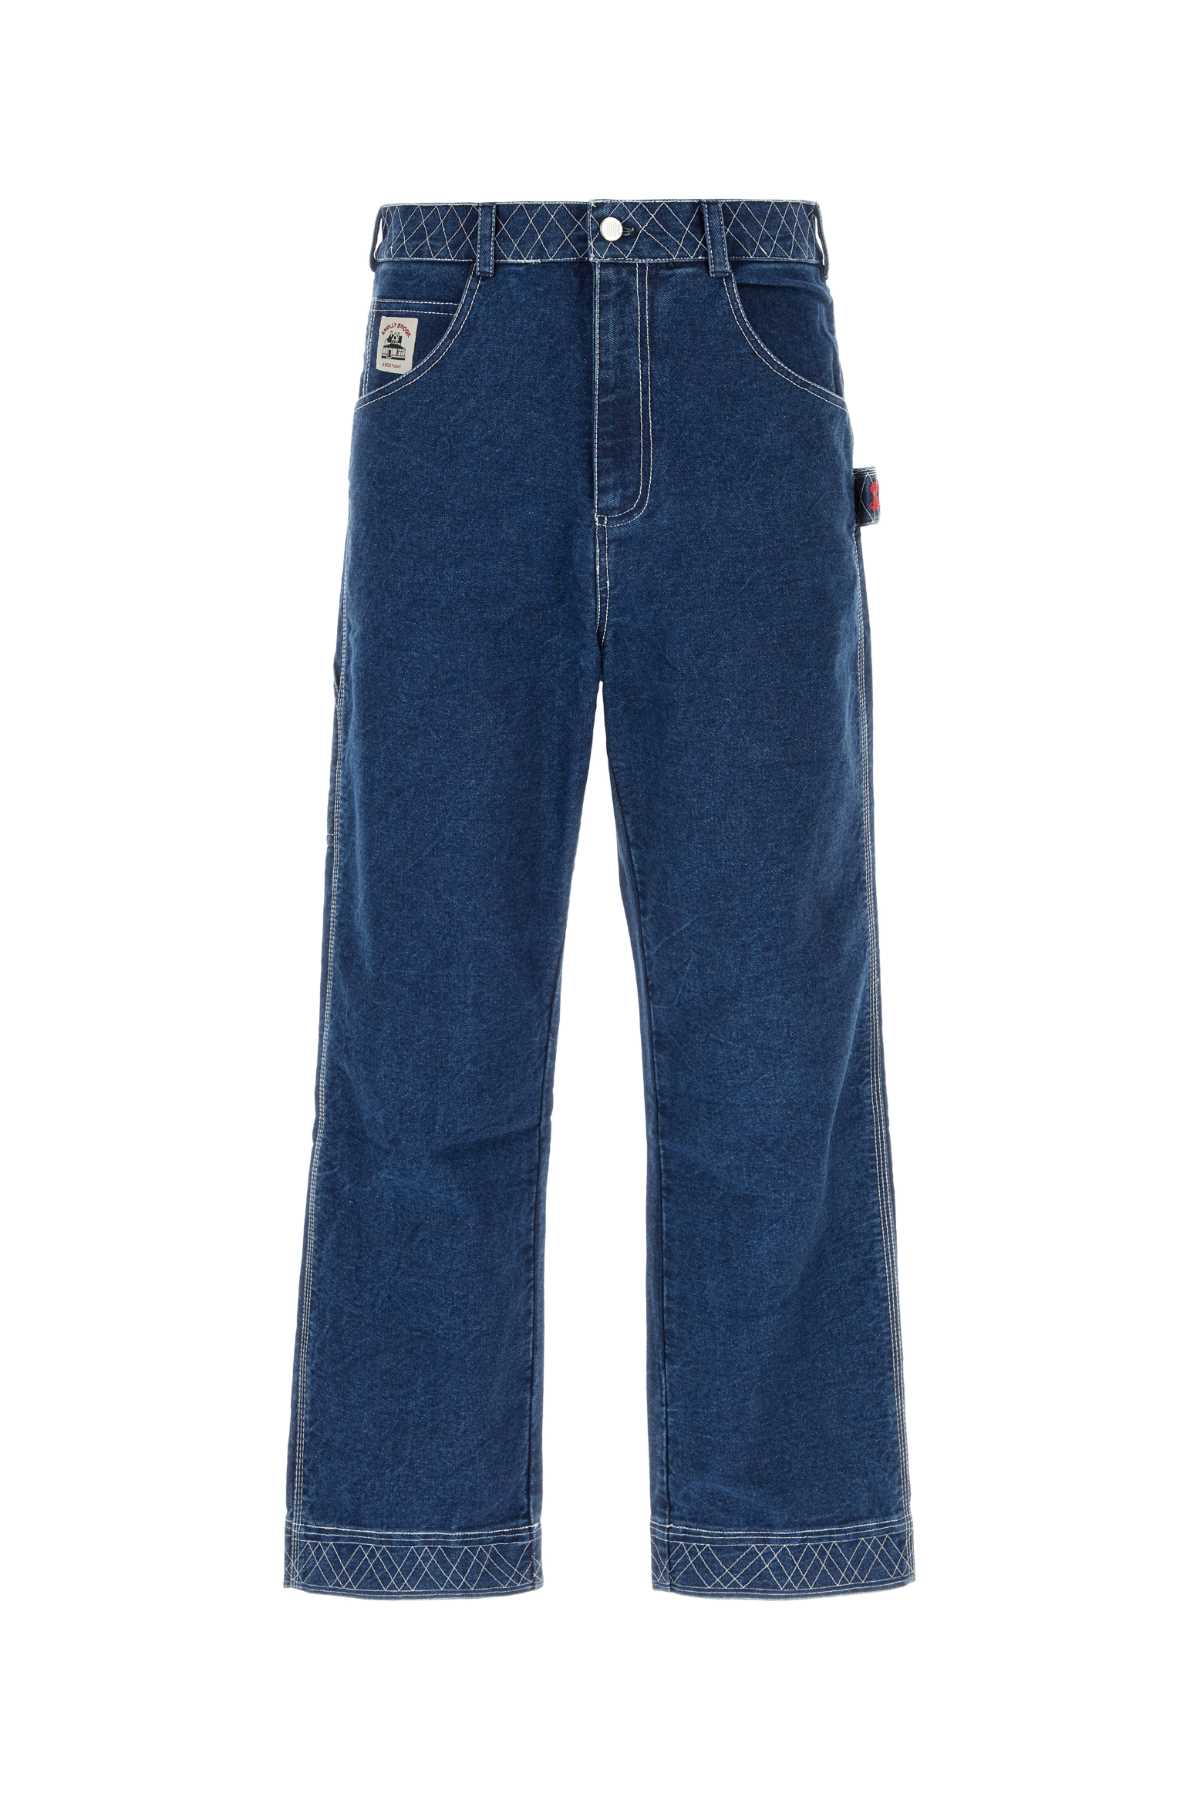 Denim Knolly Brook Jeans